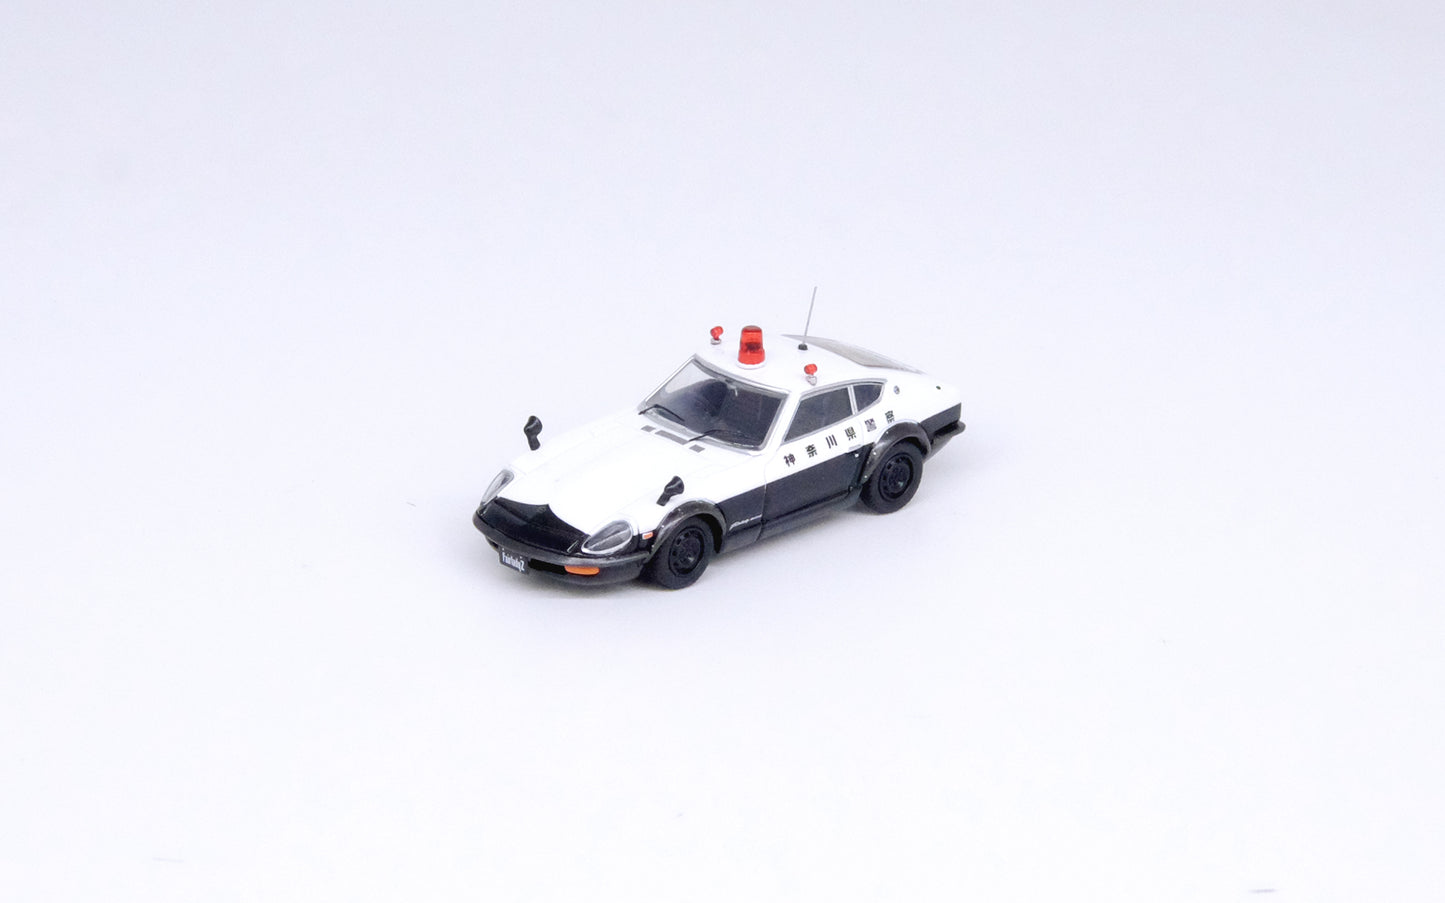 [ETA:  May 2024 ] Inno64 1/64 Nissan Fairlady 240ZG (HS30) Japanese Police Car